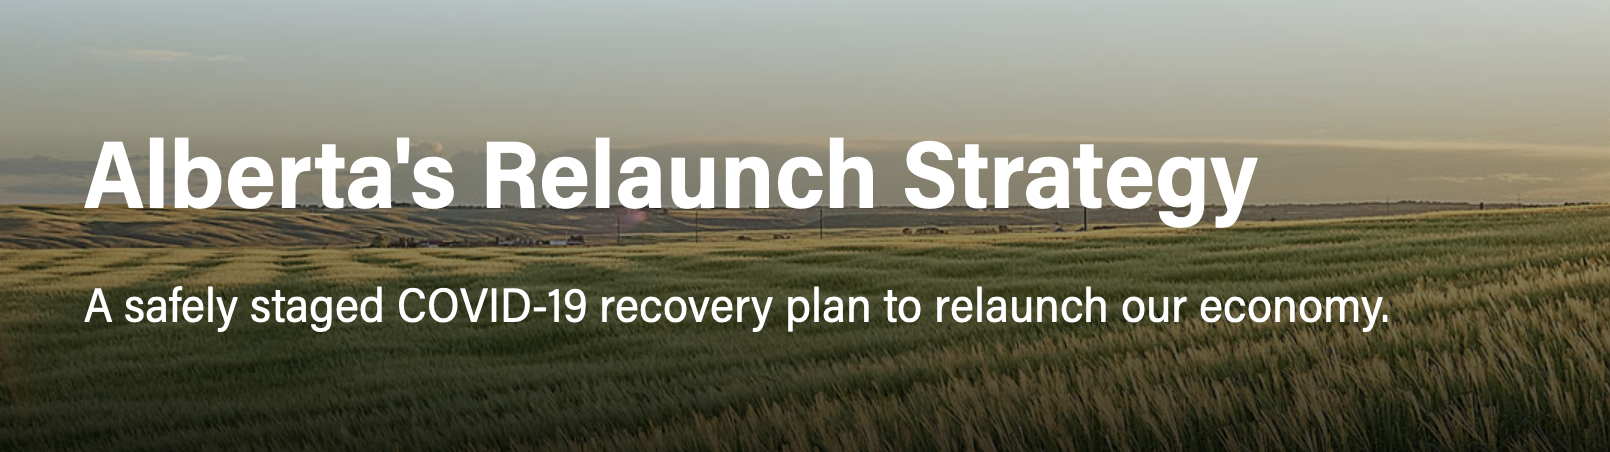 Alberta Relaunch Strategy